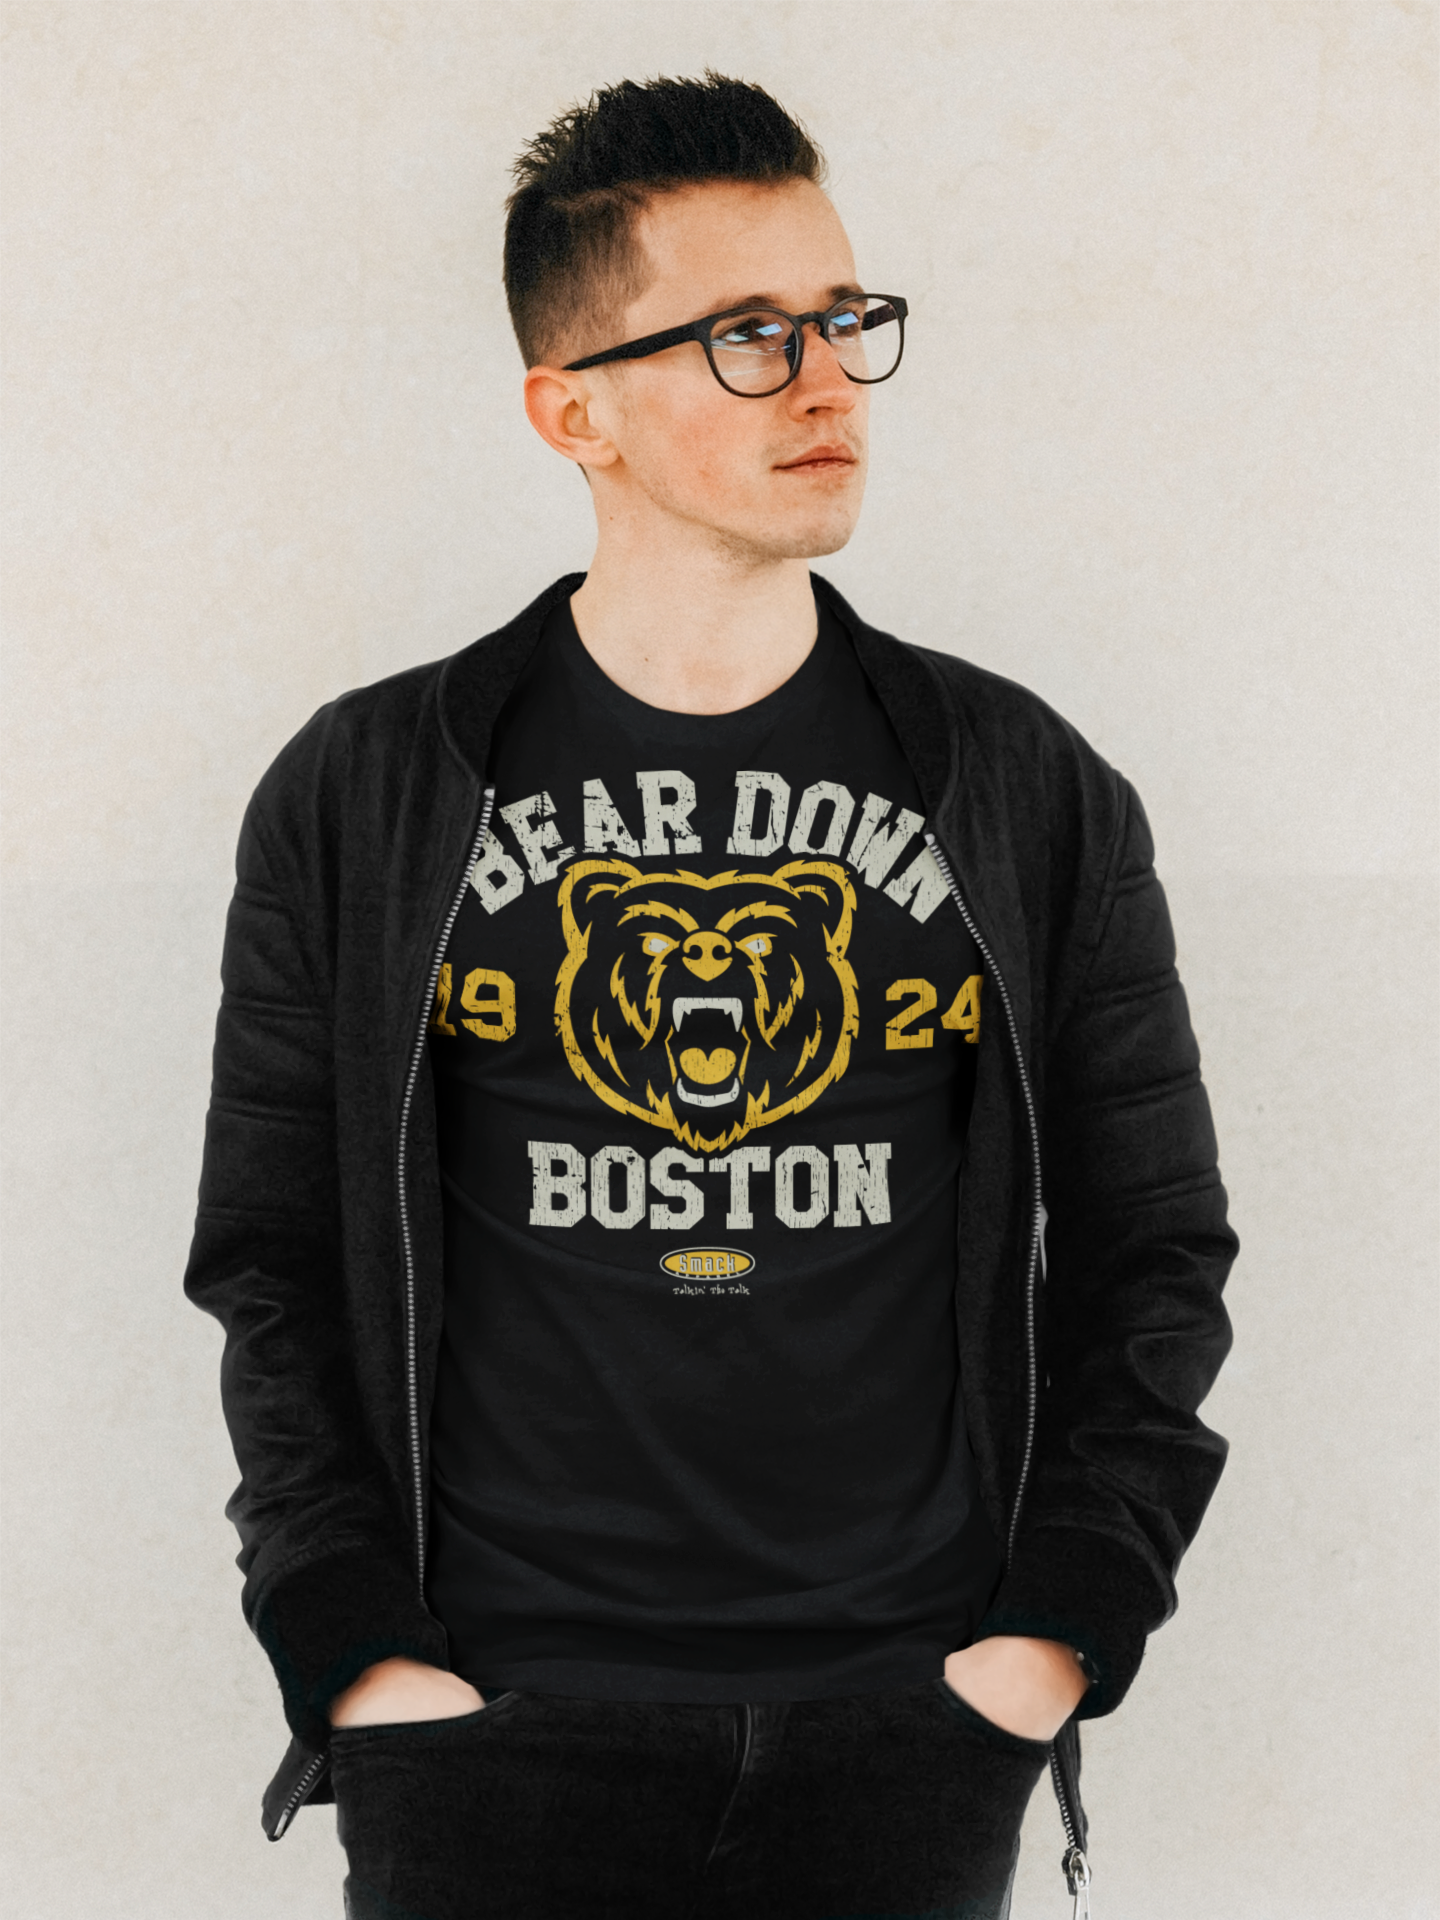 Smack Apparel Boston A Hockey Town with A Drinking Problem Shirt | Boston Pro Hockey Apparel | Shop Unlicensed Boston Gear Small / Long Sleeve / Black